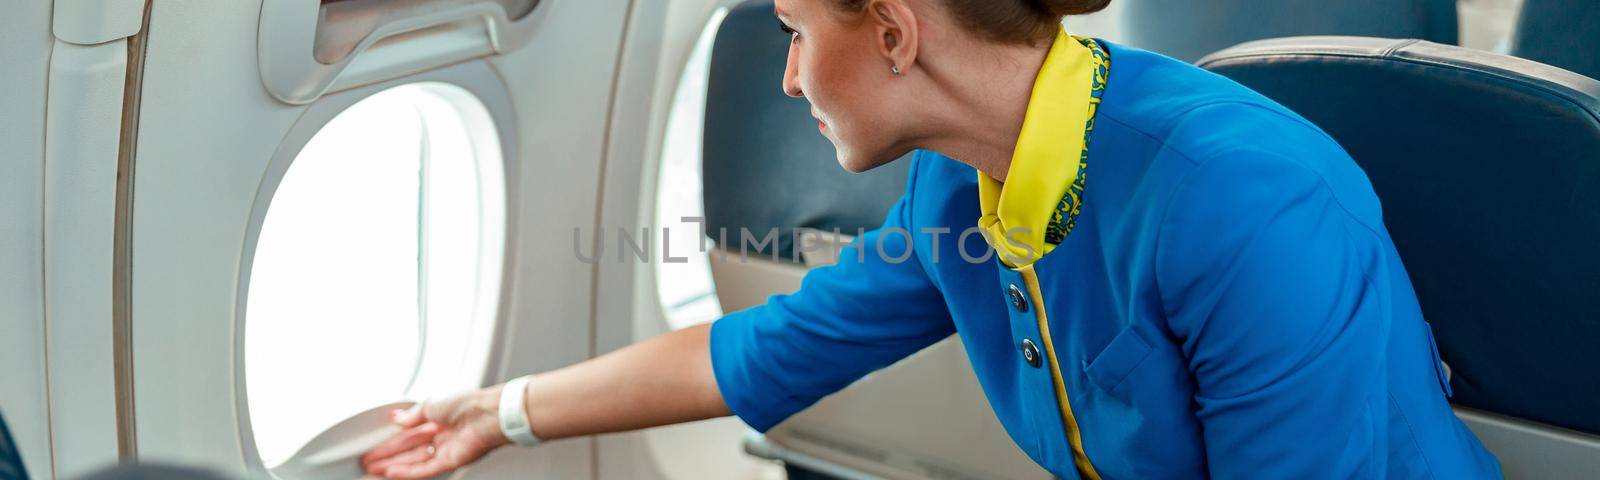 Female flight attendant opening window in airplane by Yaroslav_astakhov